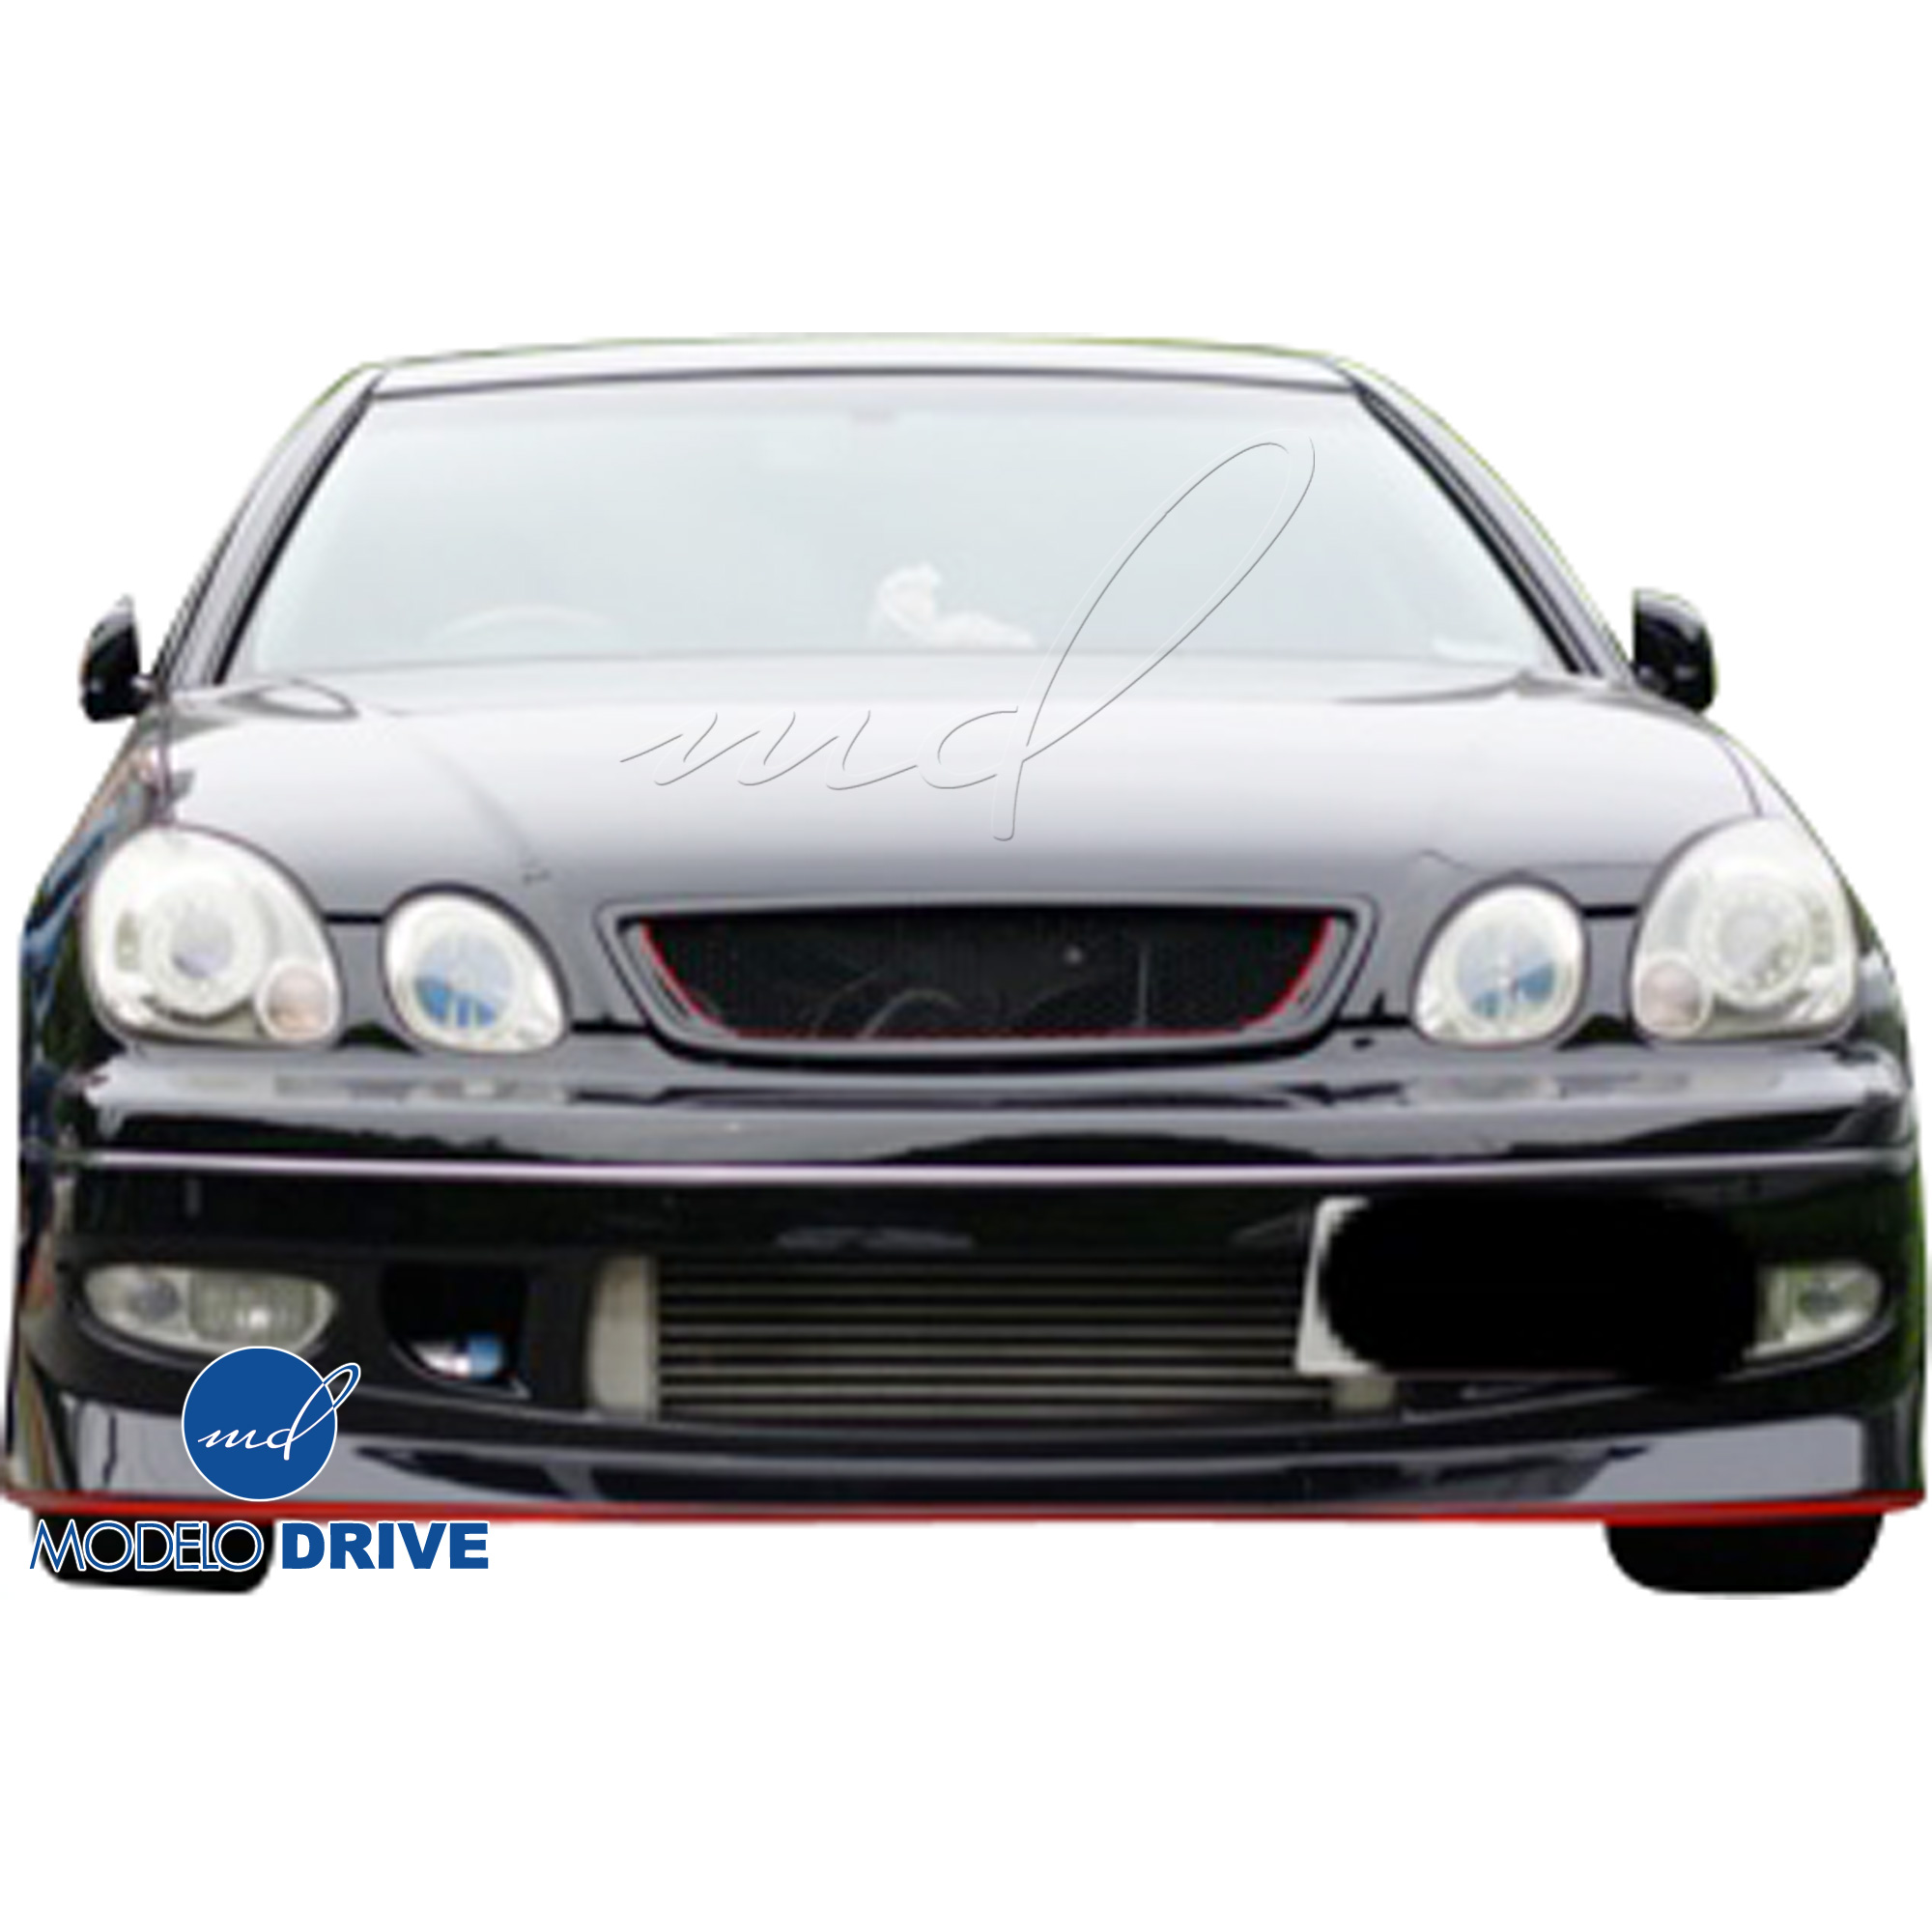 ModeloDrive FRP KAZA Front Bumper > Lexus GS300 1998-2005 - Image 16